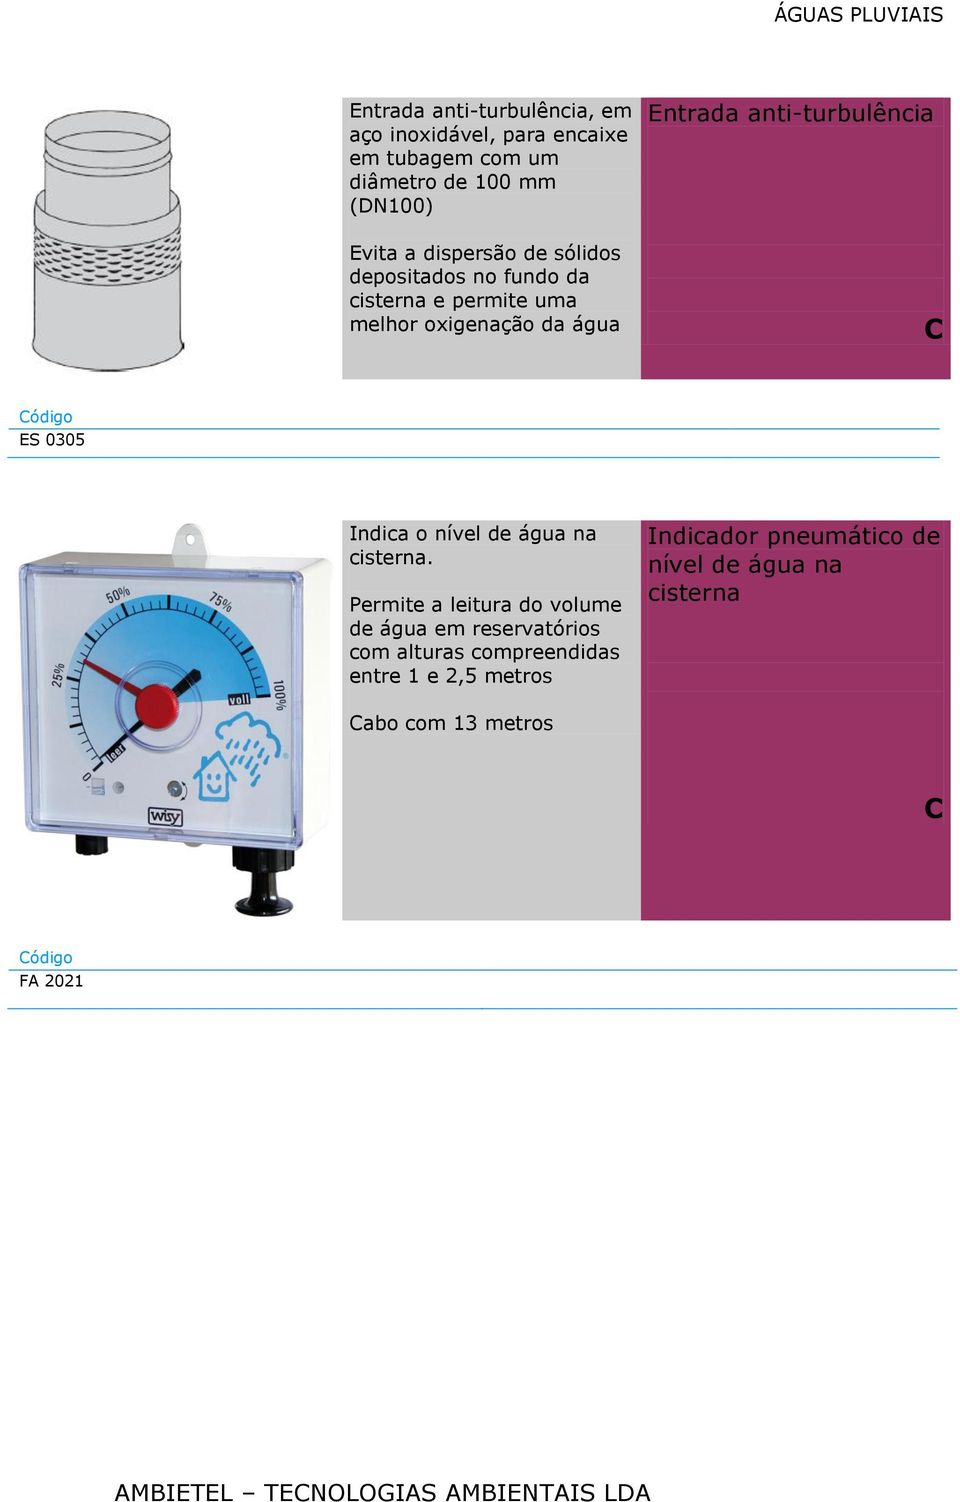 anti-turbulência ódigo ES 0305 Indica o nível de água na cisterna.